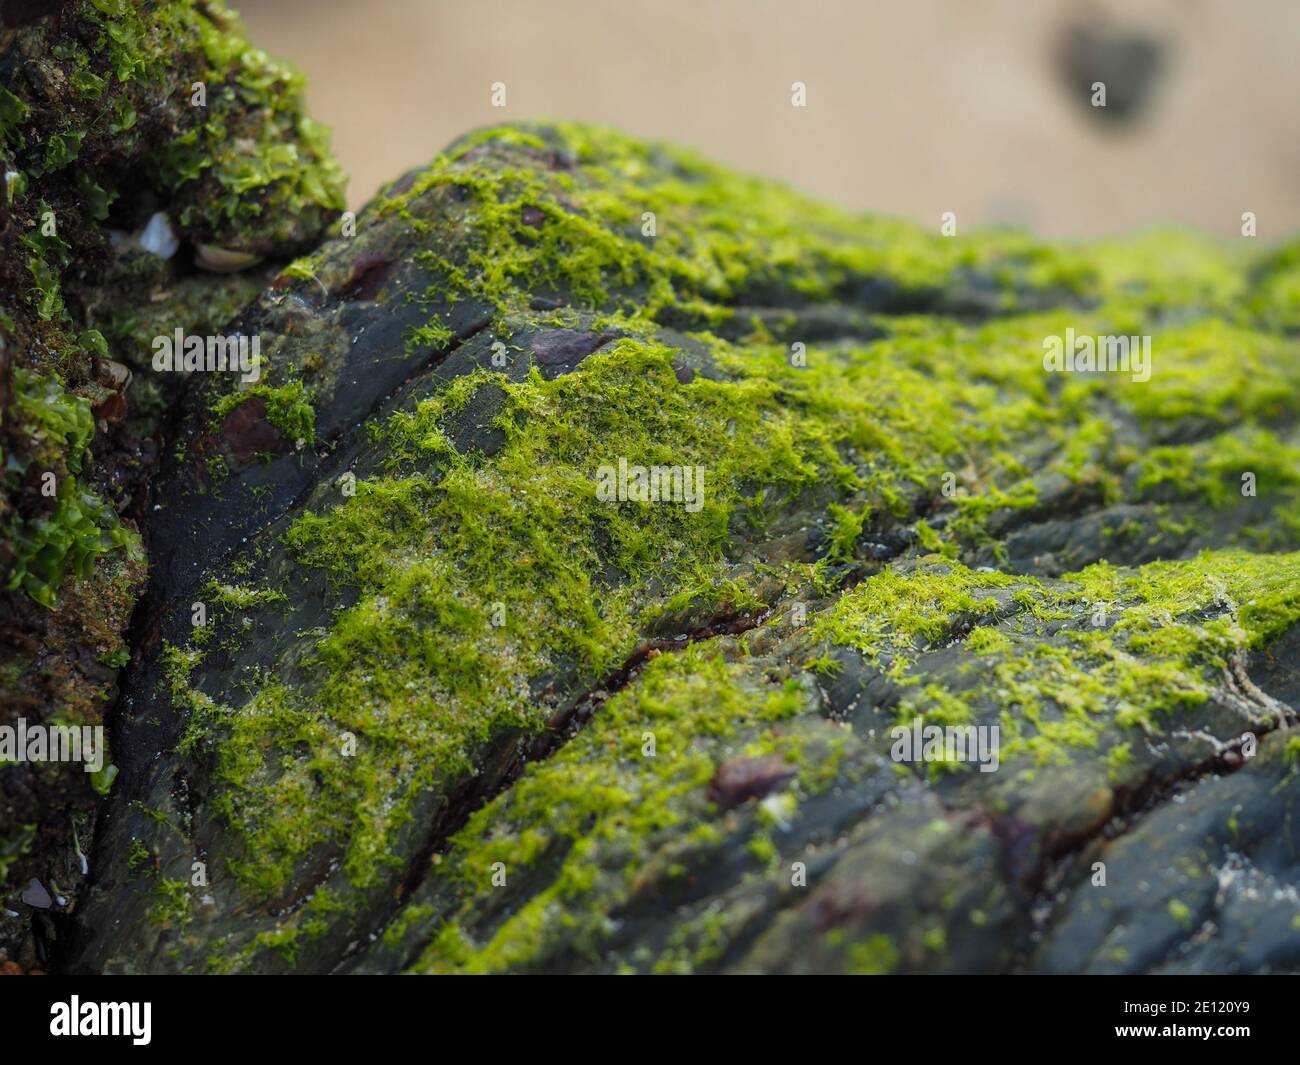 a carpet of green moss and Algae on these beach rocks, Australia Stock Photo